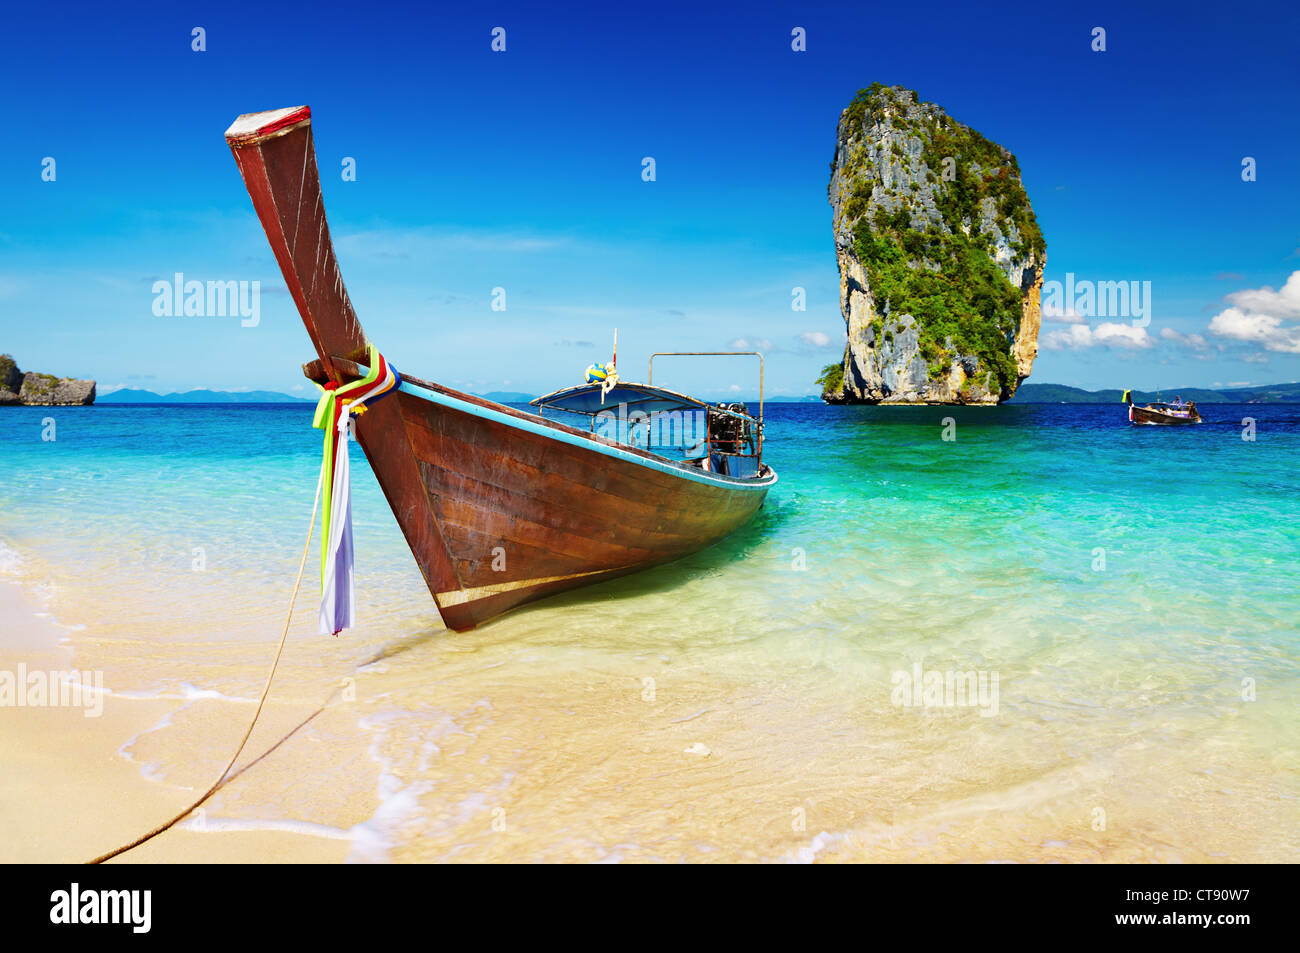 Bote de Cola Larga, Playa Tropical, Mar de Andaman, Tailandia Foto de stock